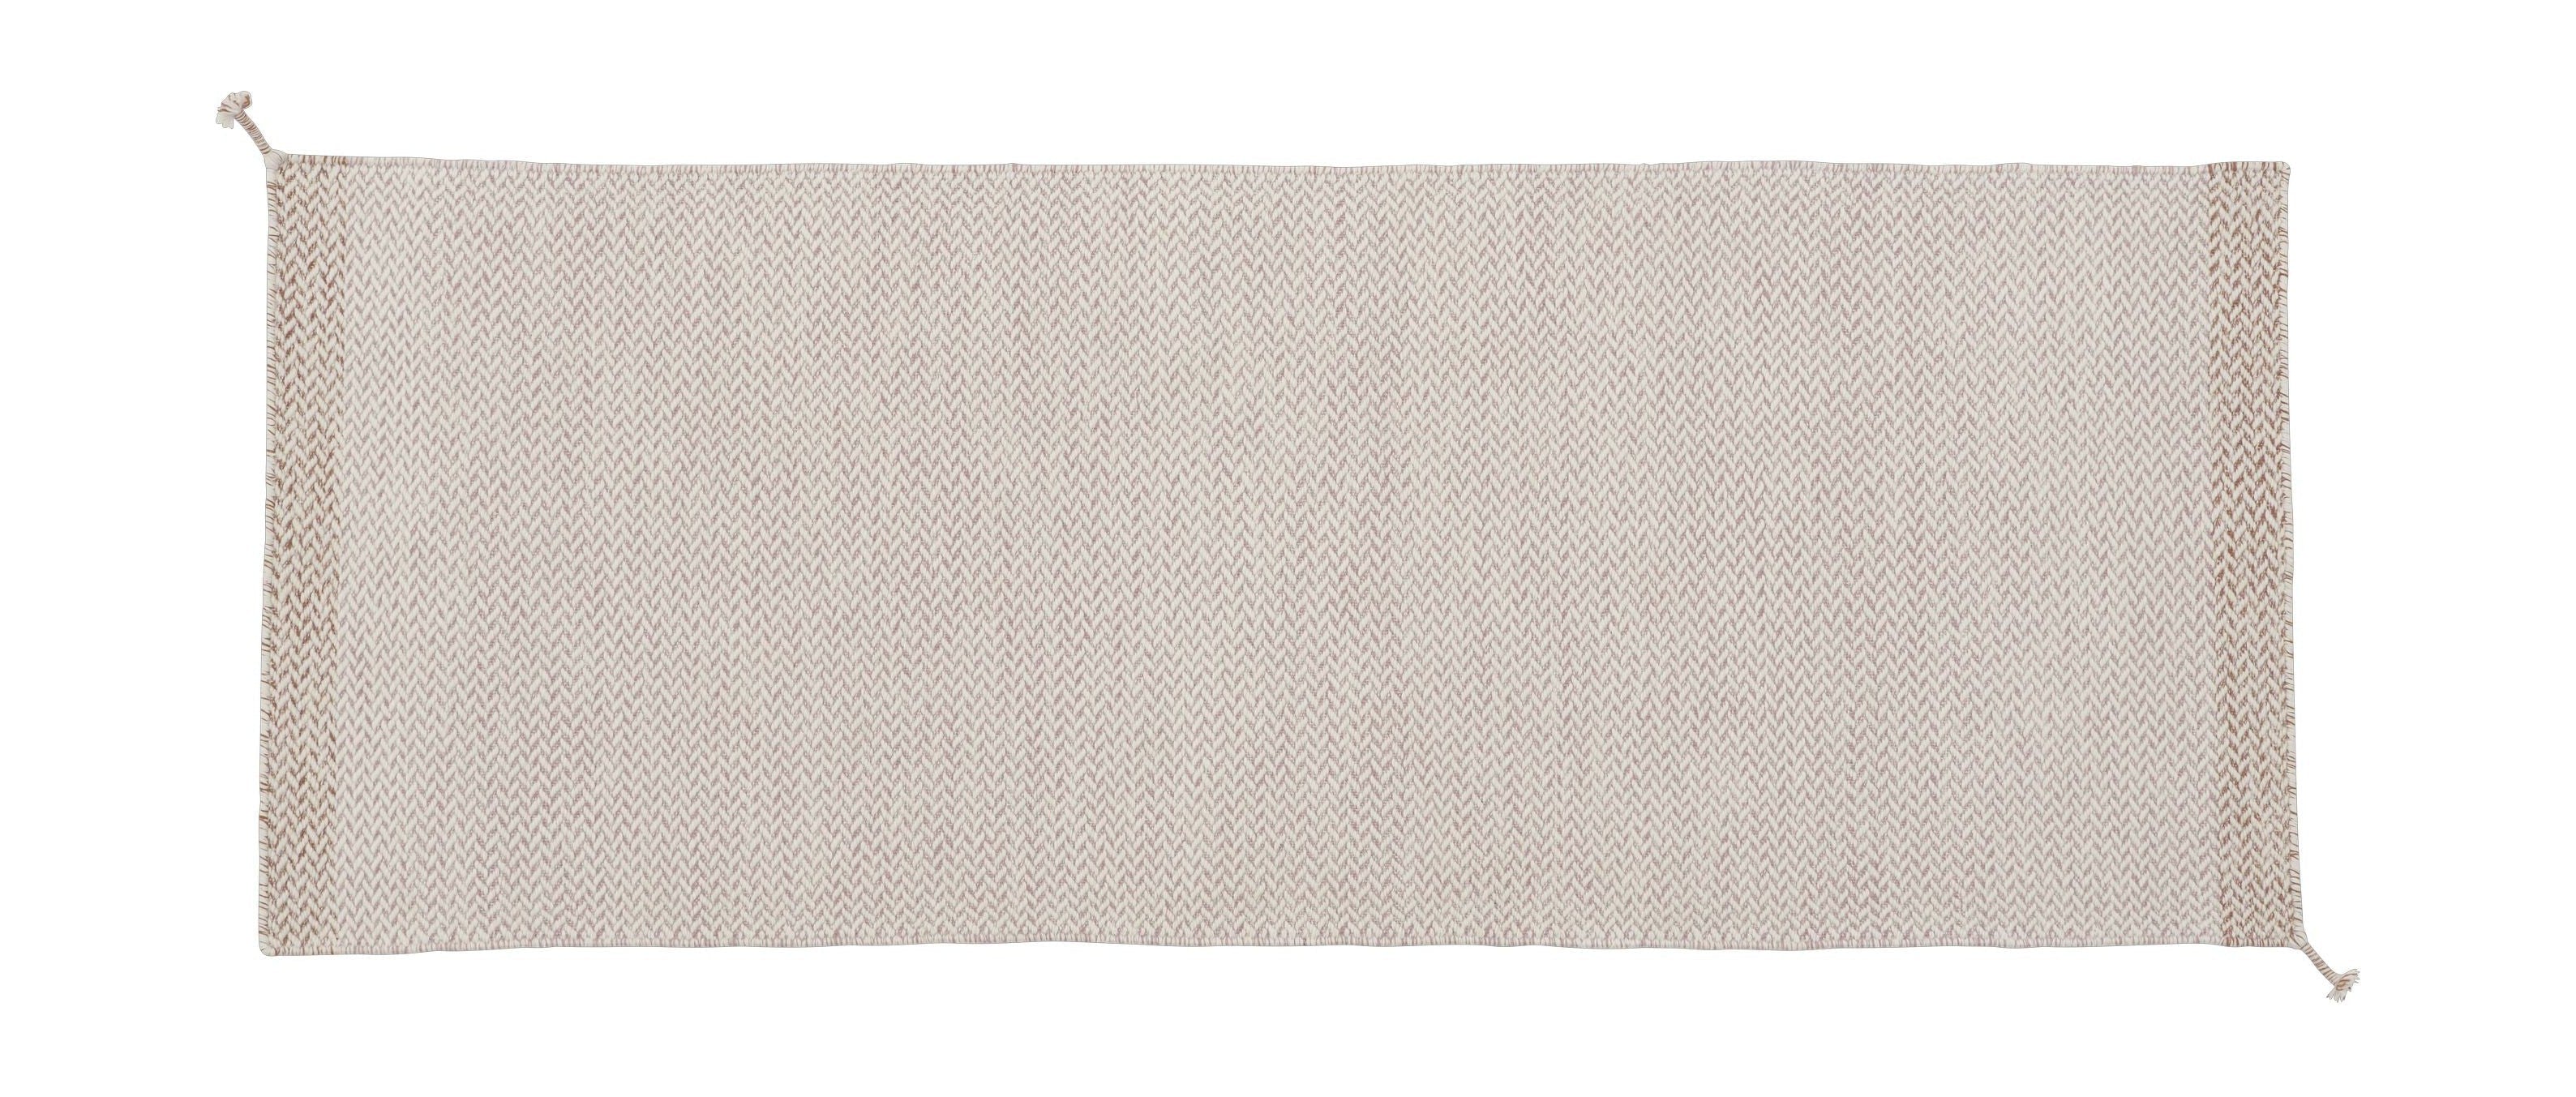 Rose de la alfombra Muuto Shaply, 200 x 80 cm